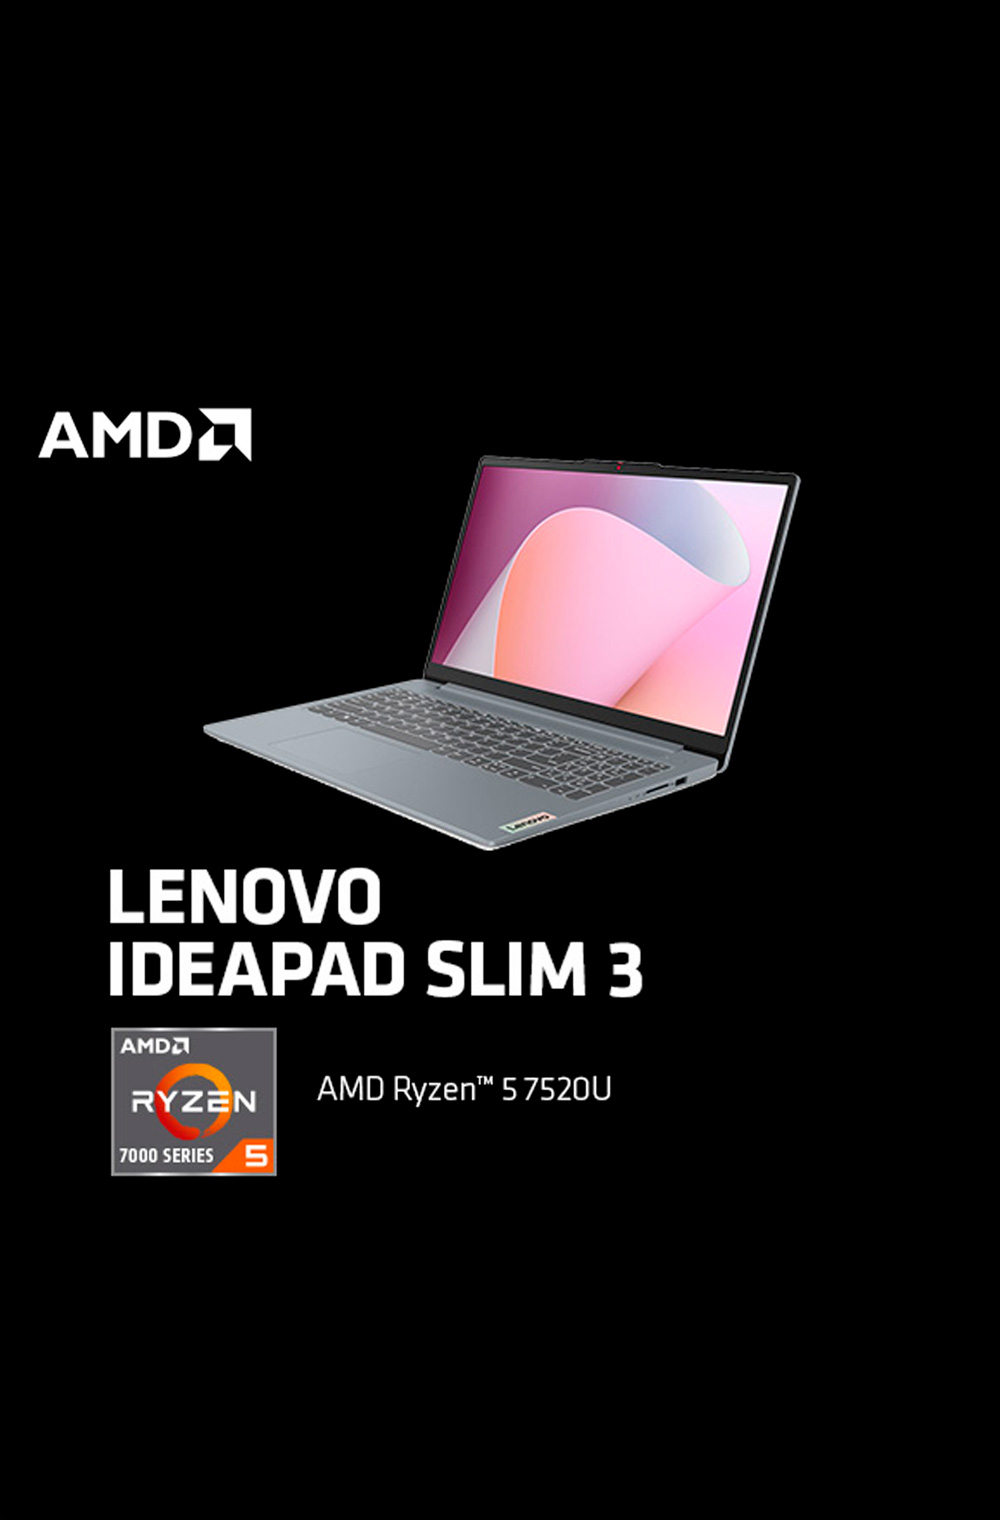 Lenovo-Ideapad-Slim-3_banner-cat_desktop.jpg